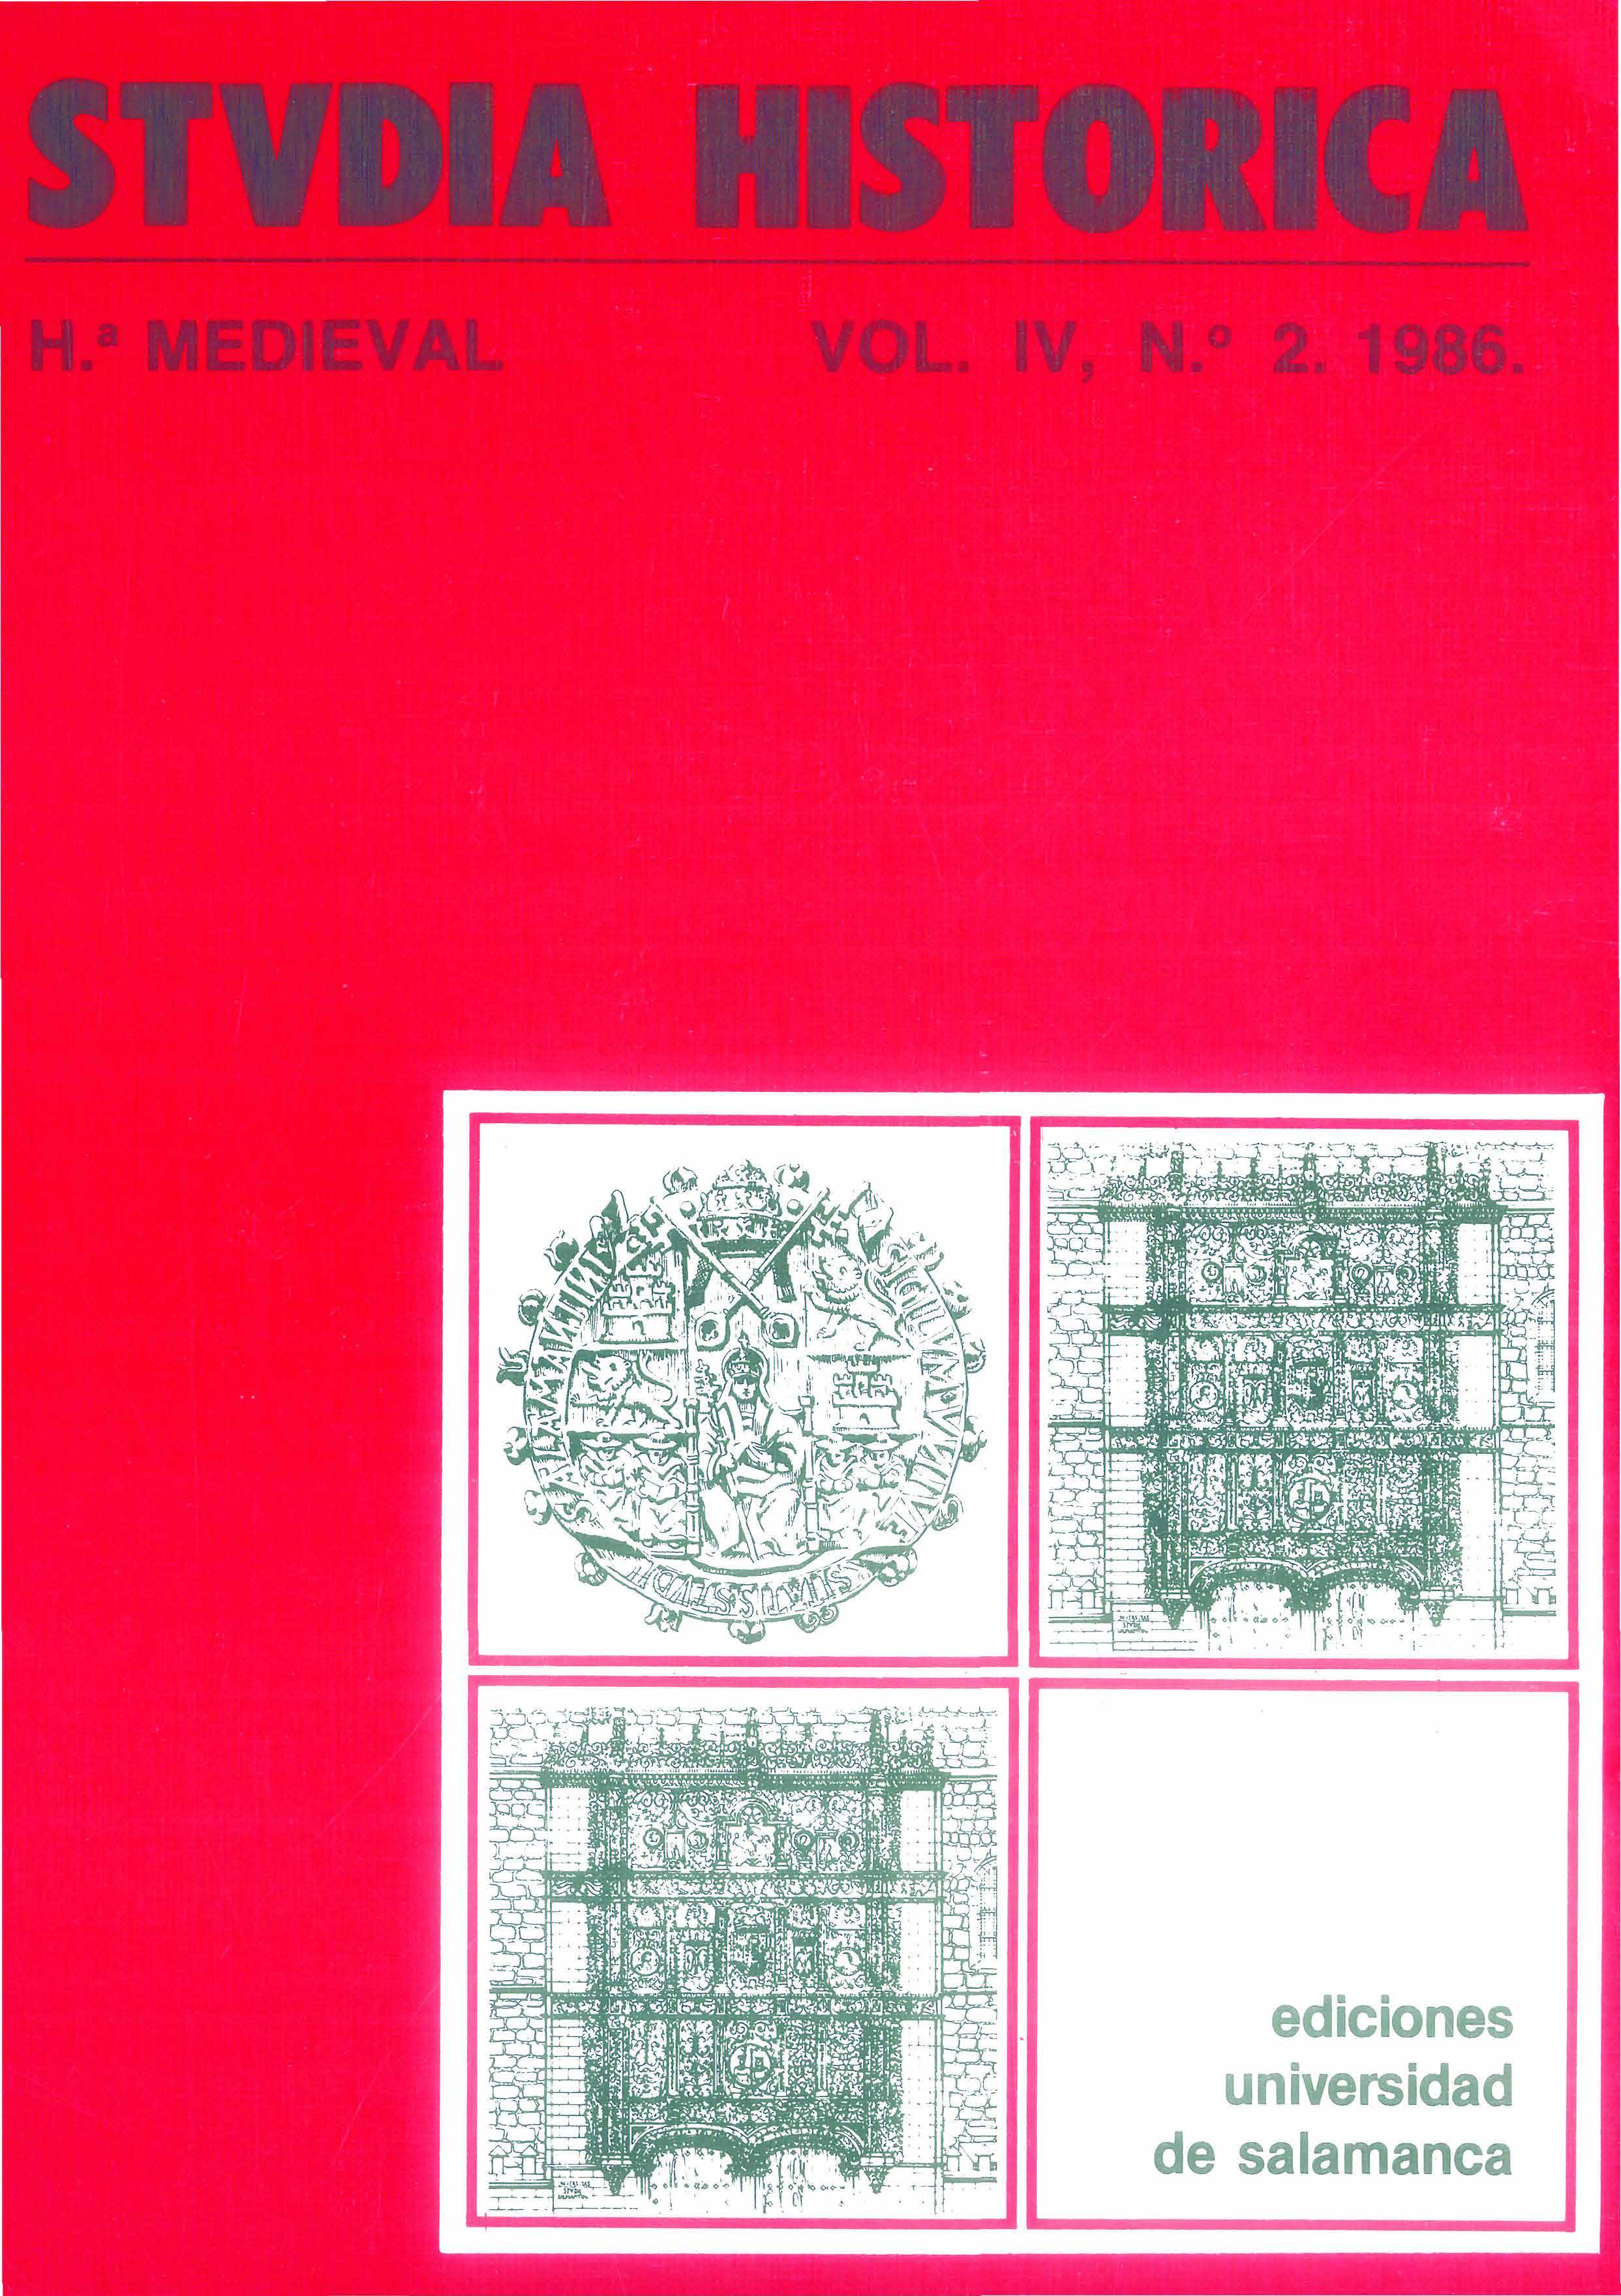                         Ver Vol. 4 (1986)
                    